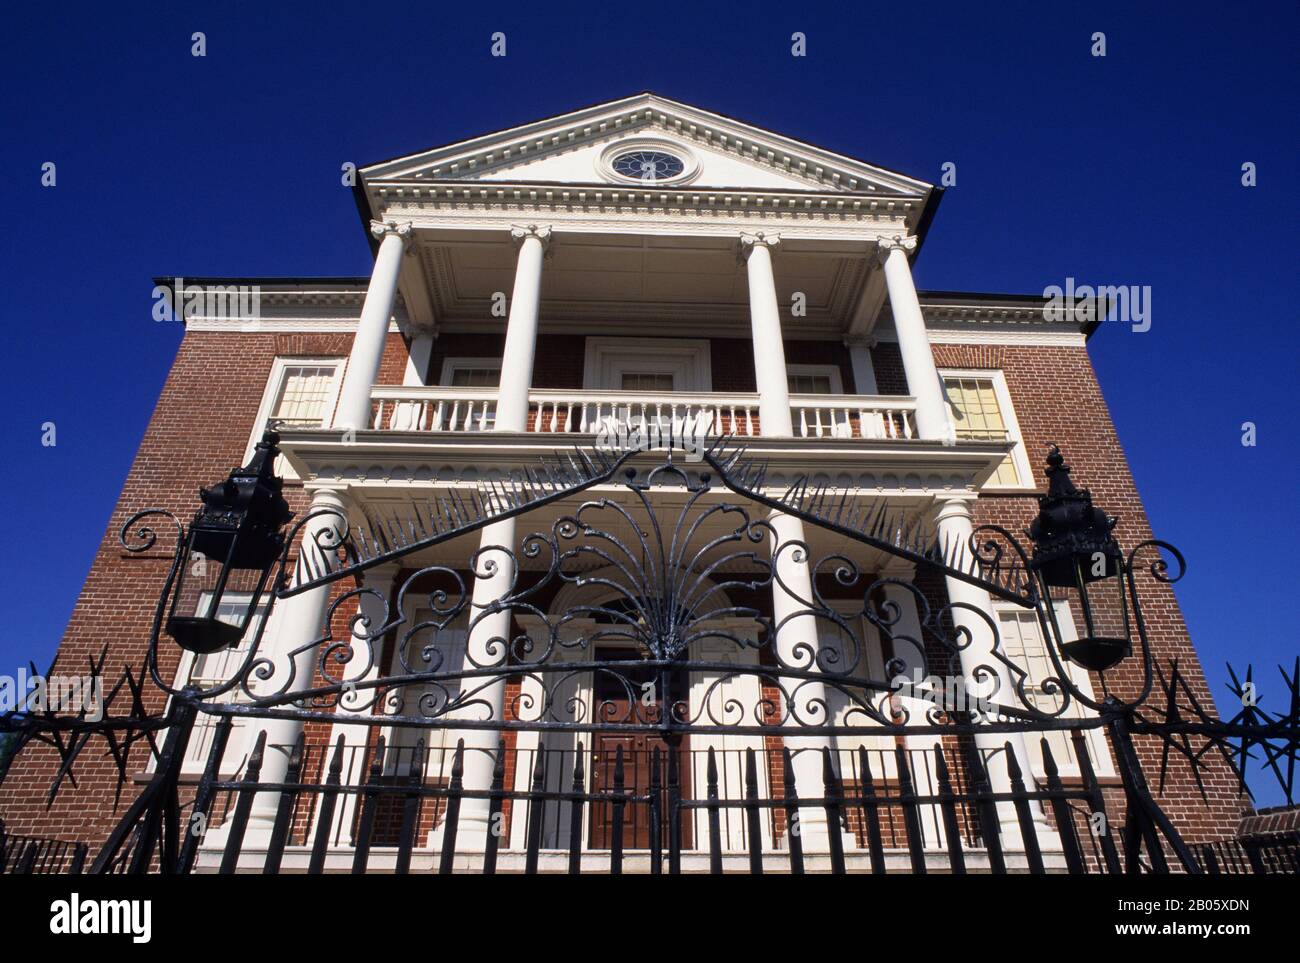 USA, SOUTH CAROLINA, CHARLESTON, KING ST., NILES BREWTON HOUSE, 1765, GEORGIAN ARCHITECHTURE Stock Photo